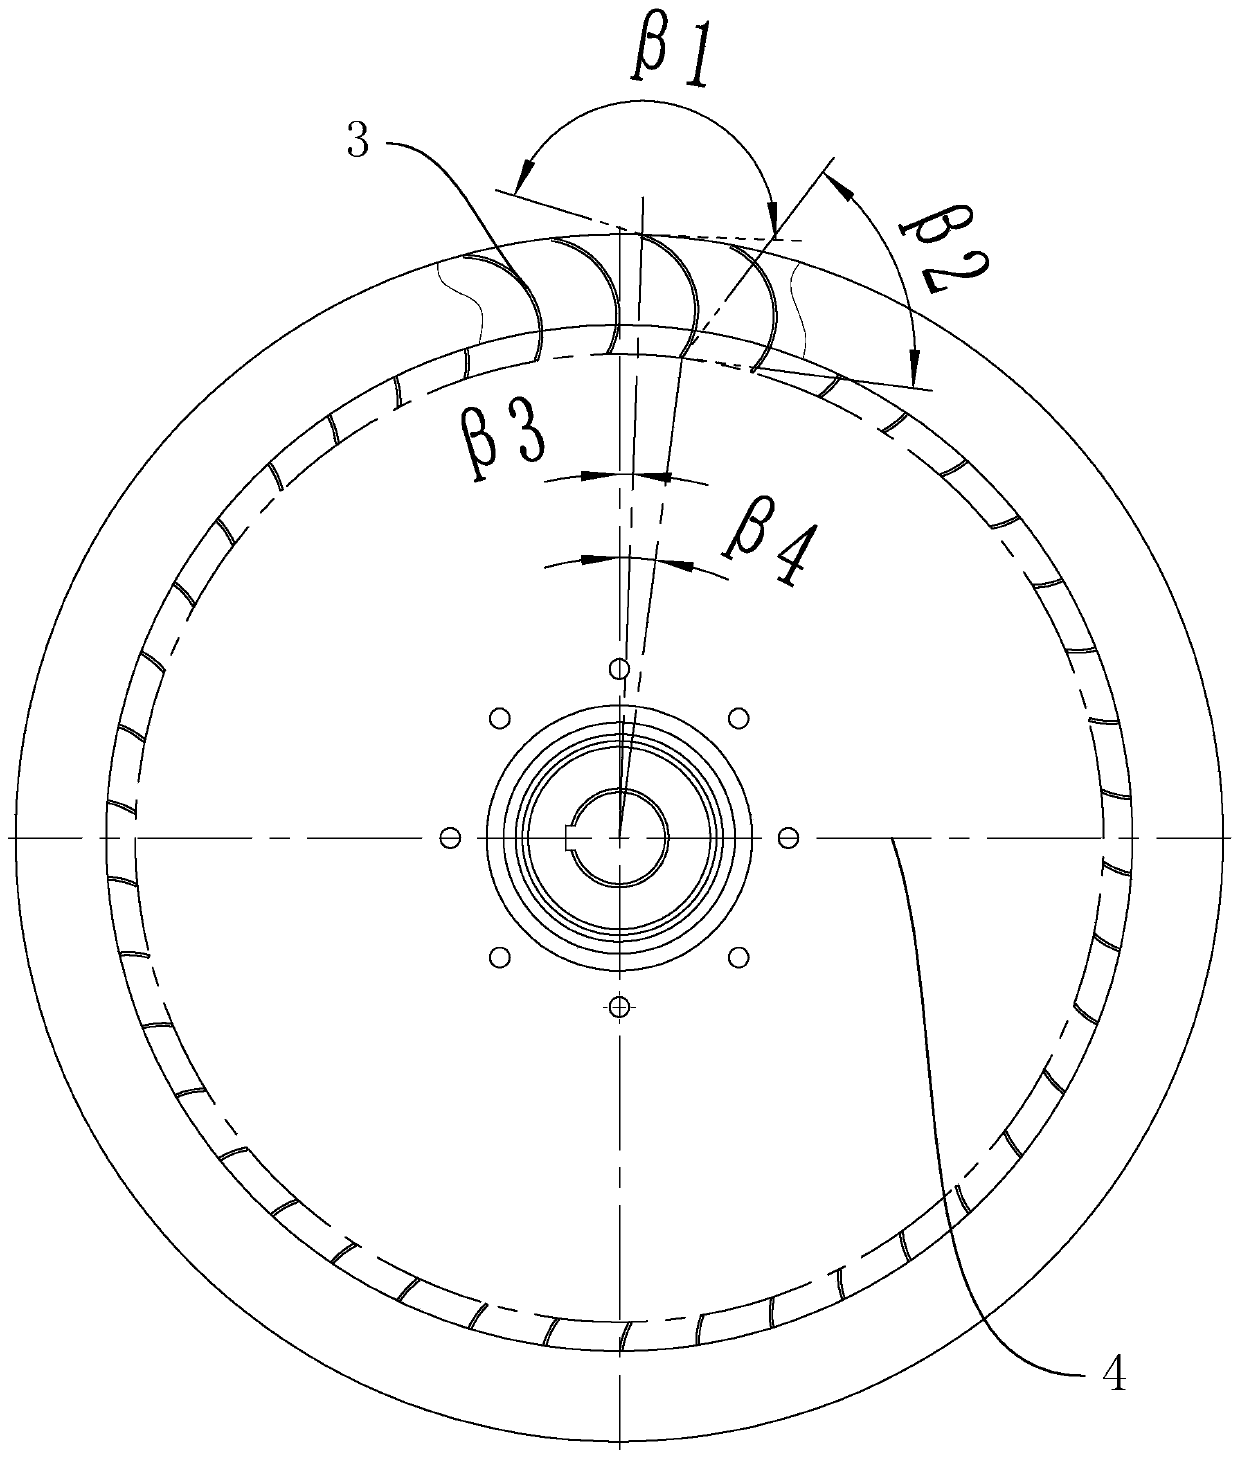 Wind wheel and centrifugal fan